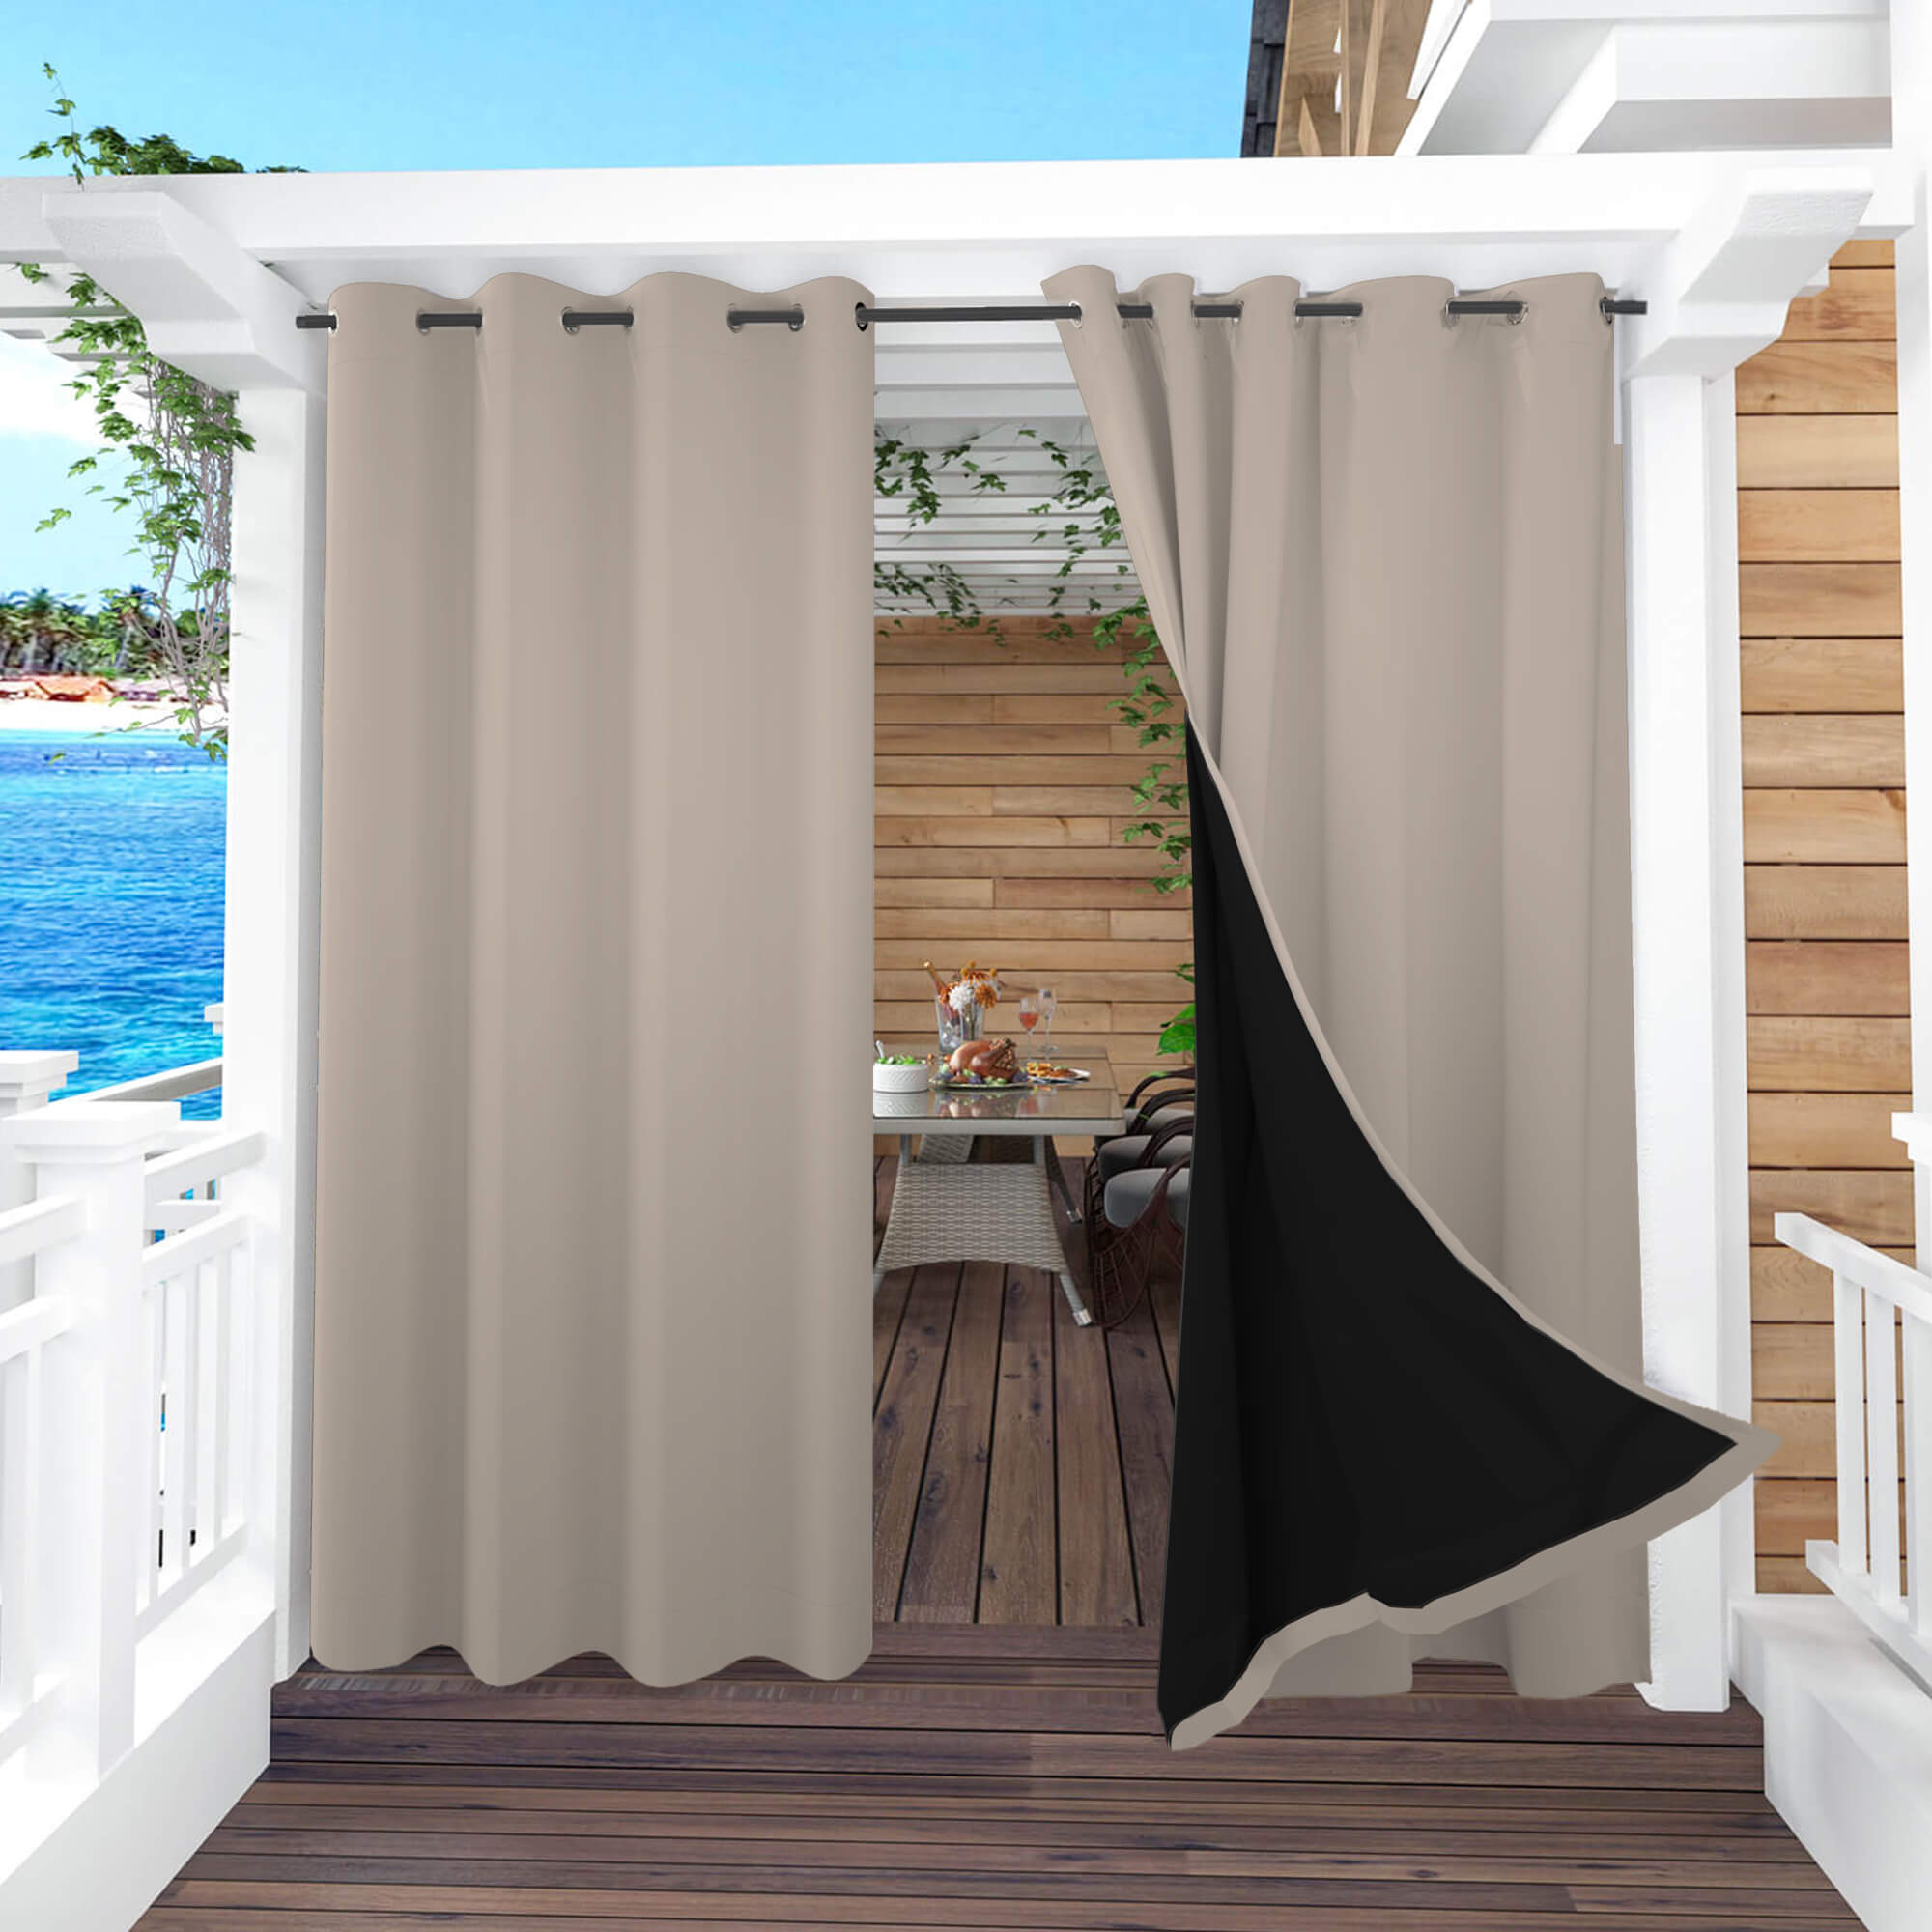 Snowcity Thermal Curtains/Drapes 1 Panel Khaki | Waterproof Curtains Grommet/Tab Top | Custom Blackout Curtains